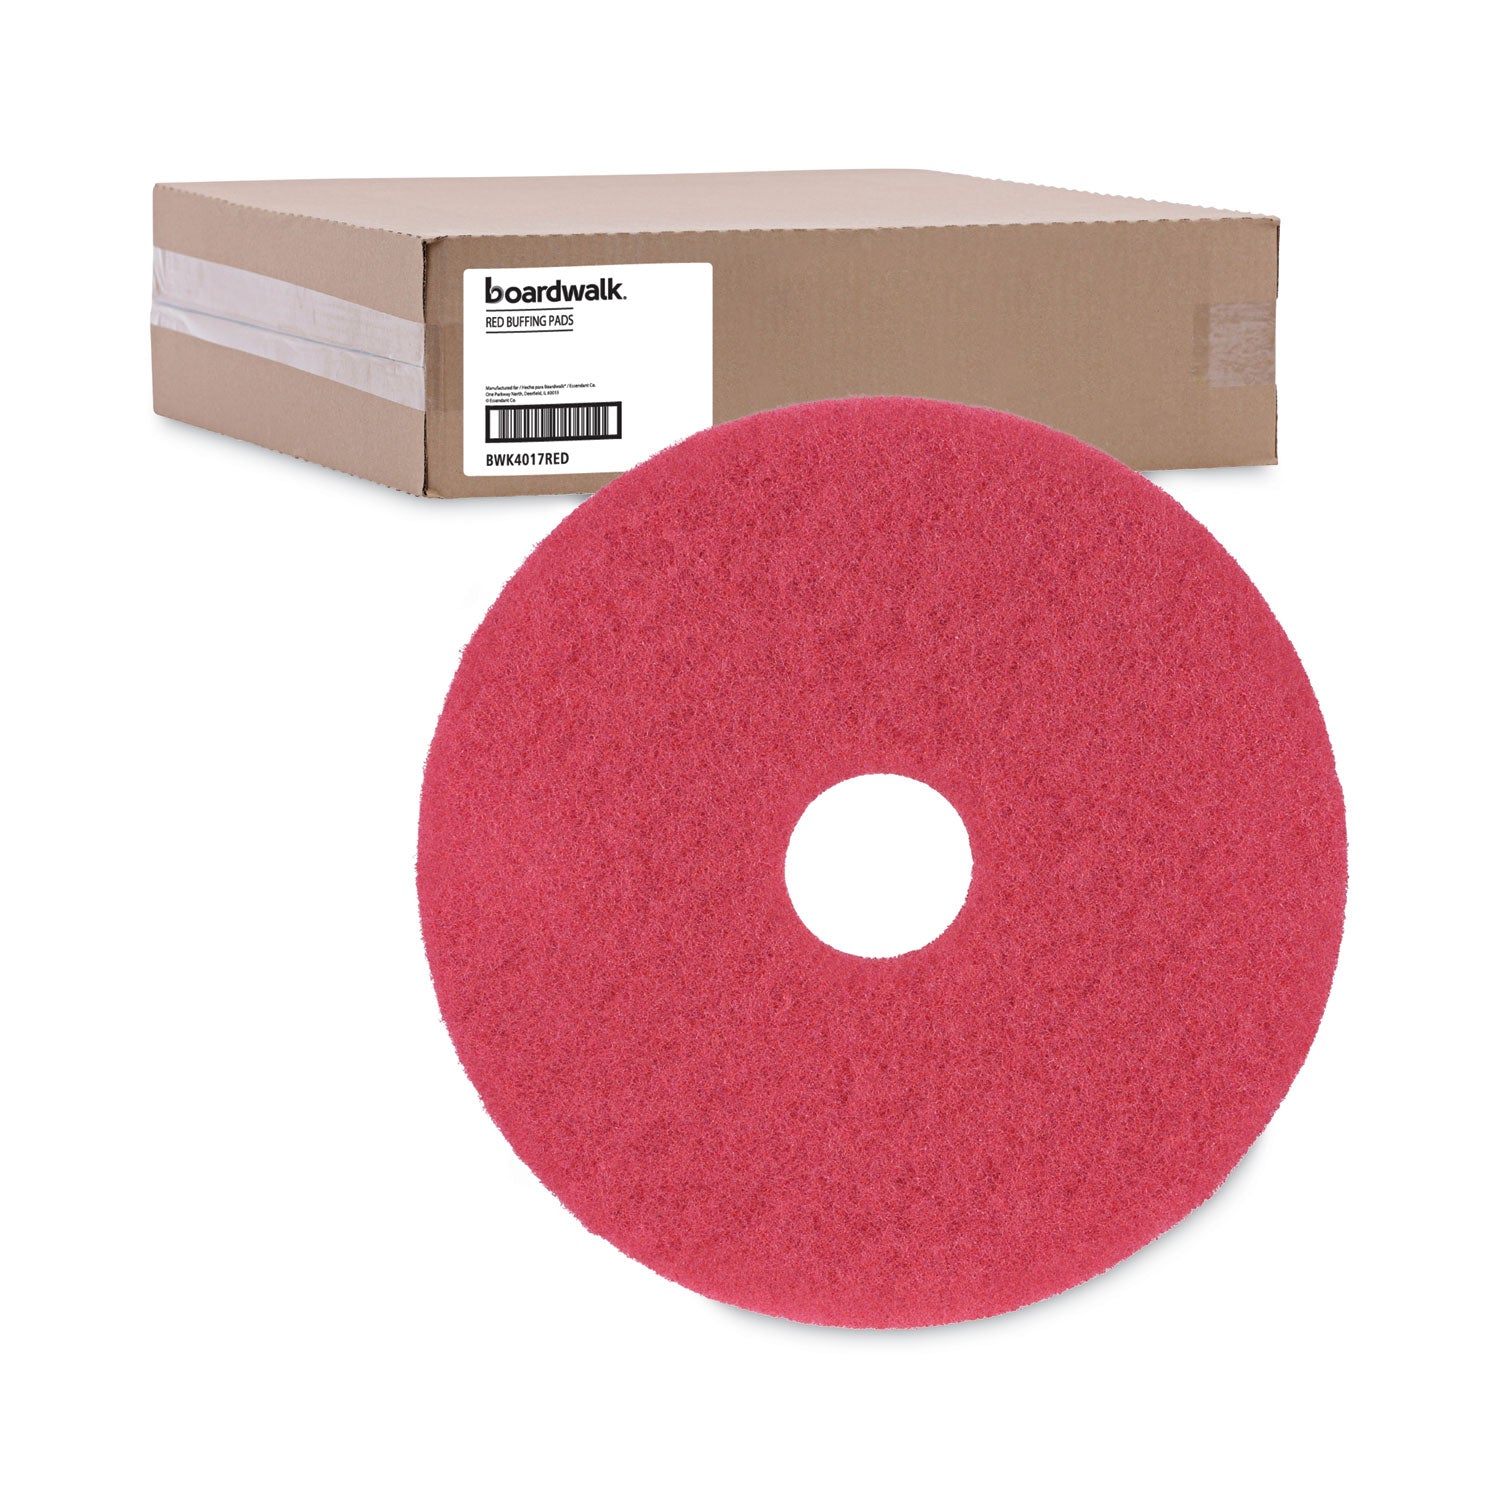 Buffing Floor Pads, 17" Diameter, Red, 5/Carton - 